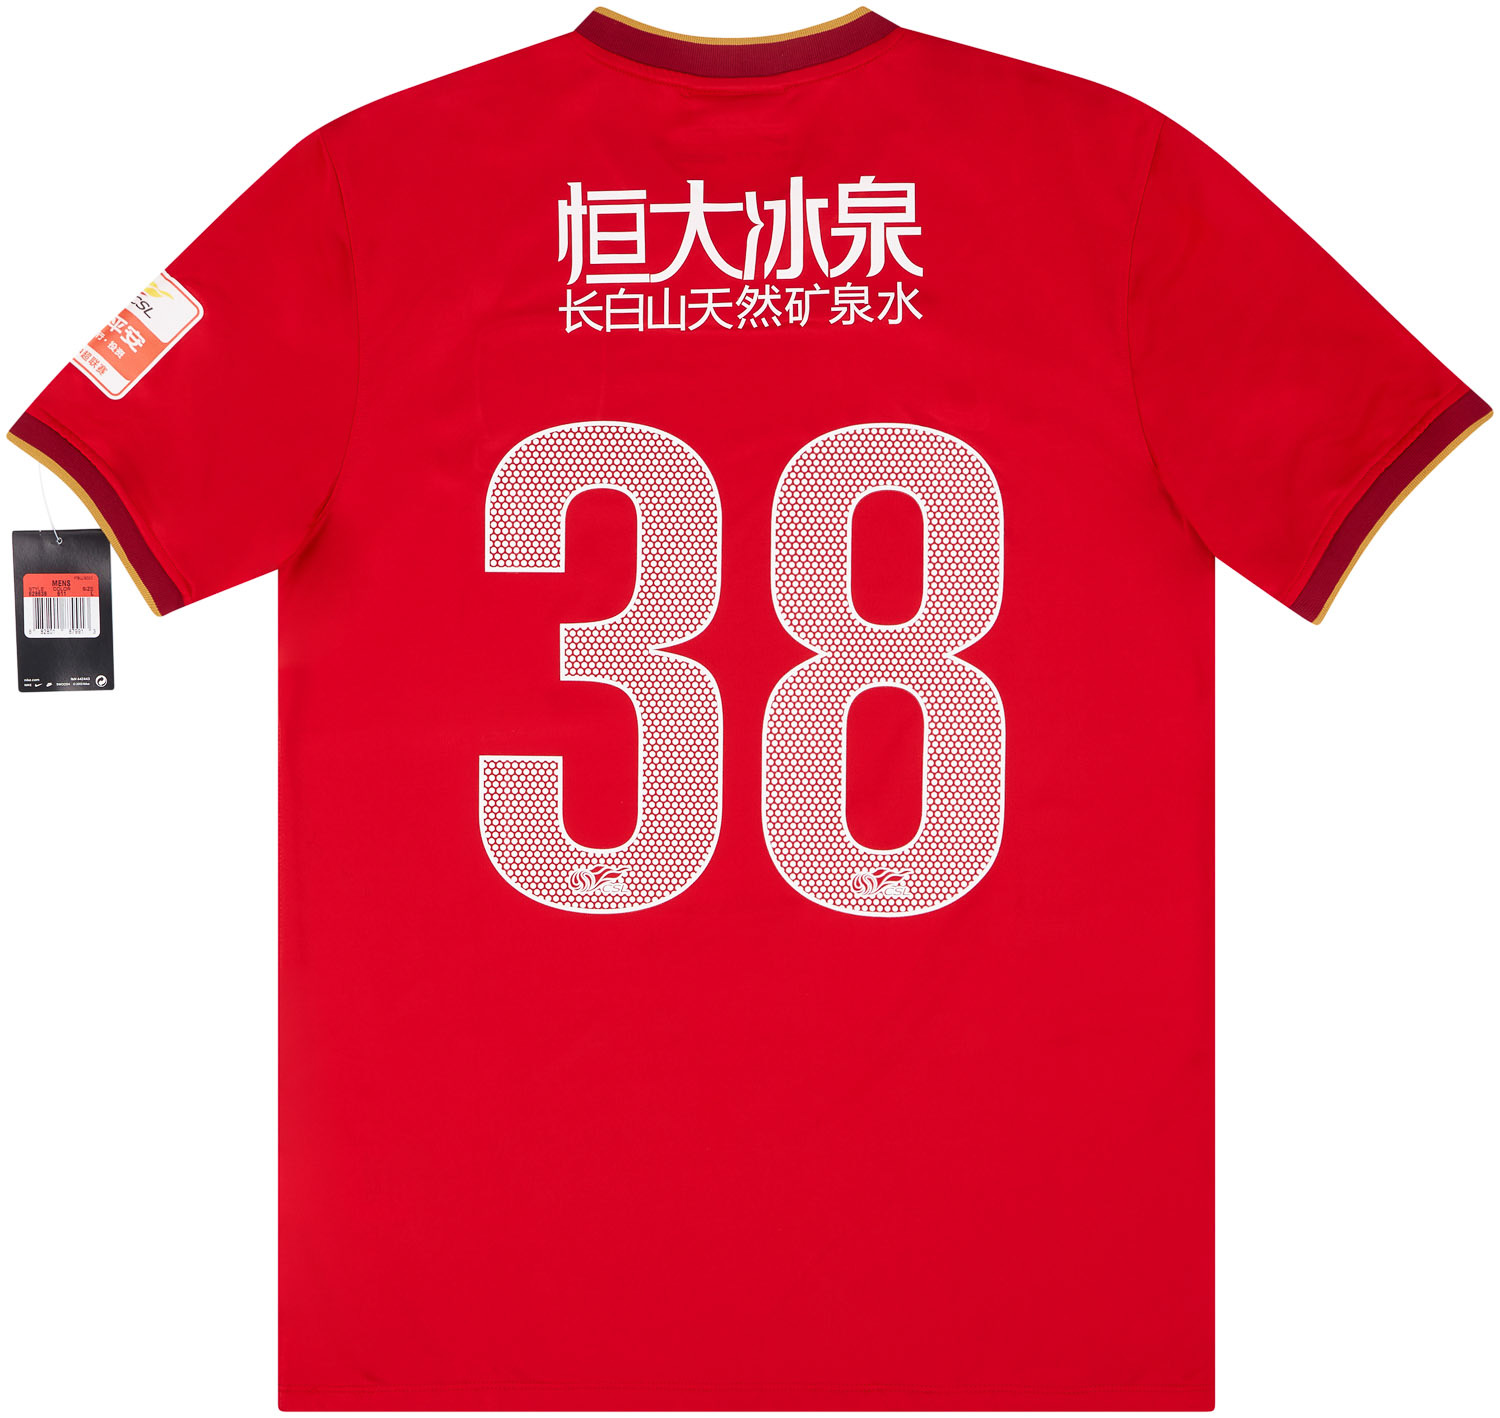 2014 Guangzhou Evergrande Home CSL Shirt #38 (Gilardino)